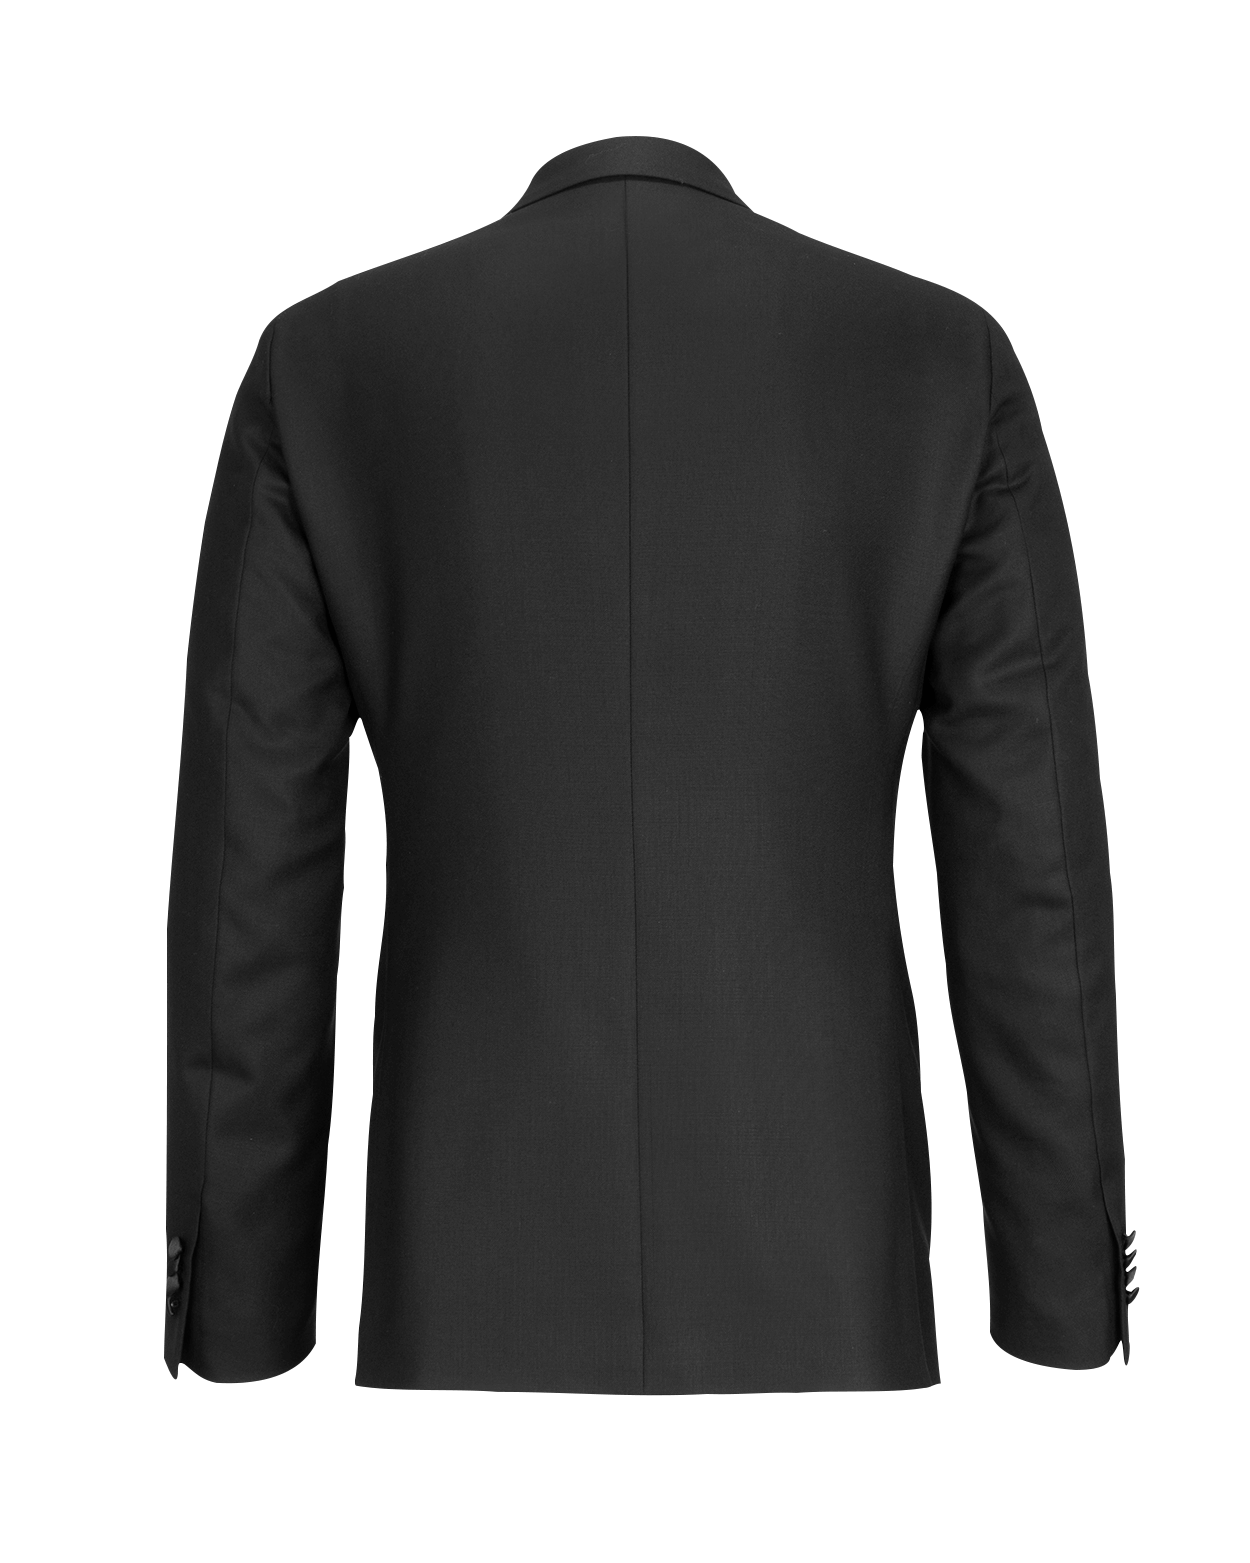 Wool Tuxedo Double-Breasted Black